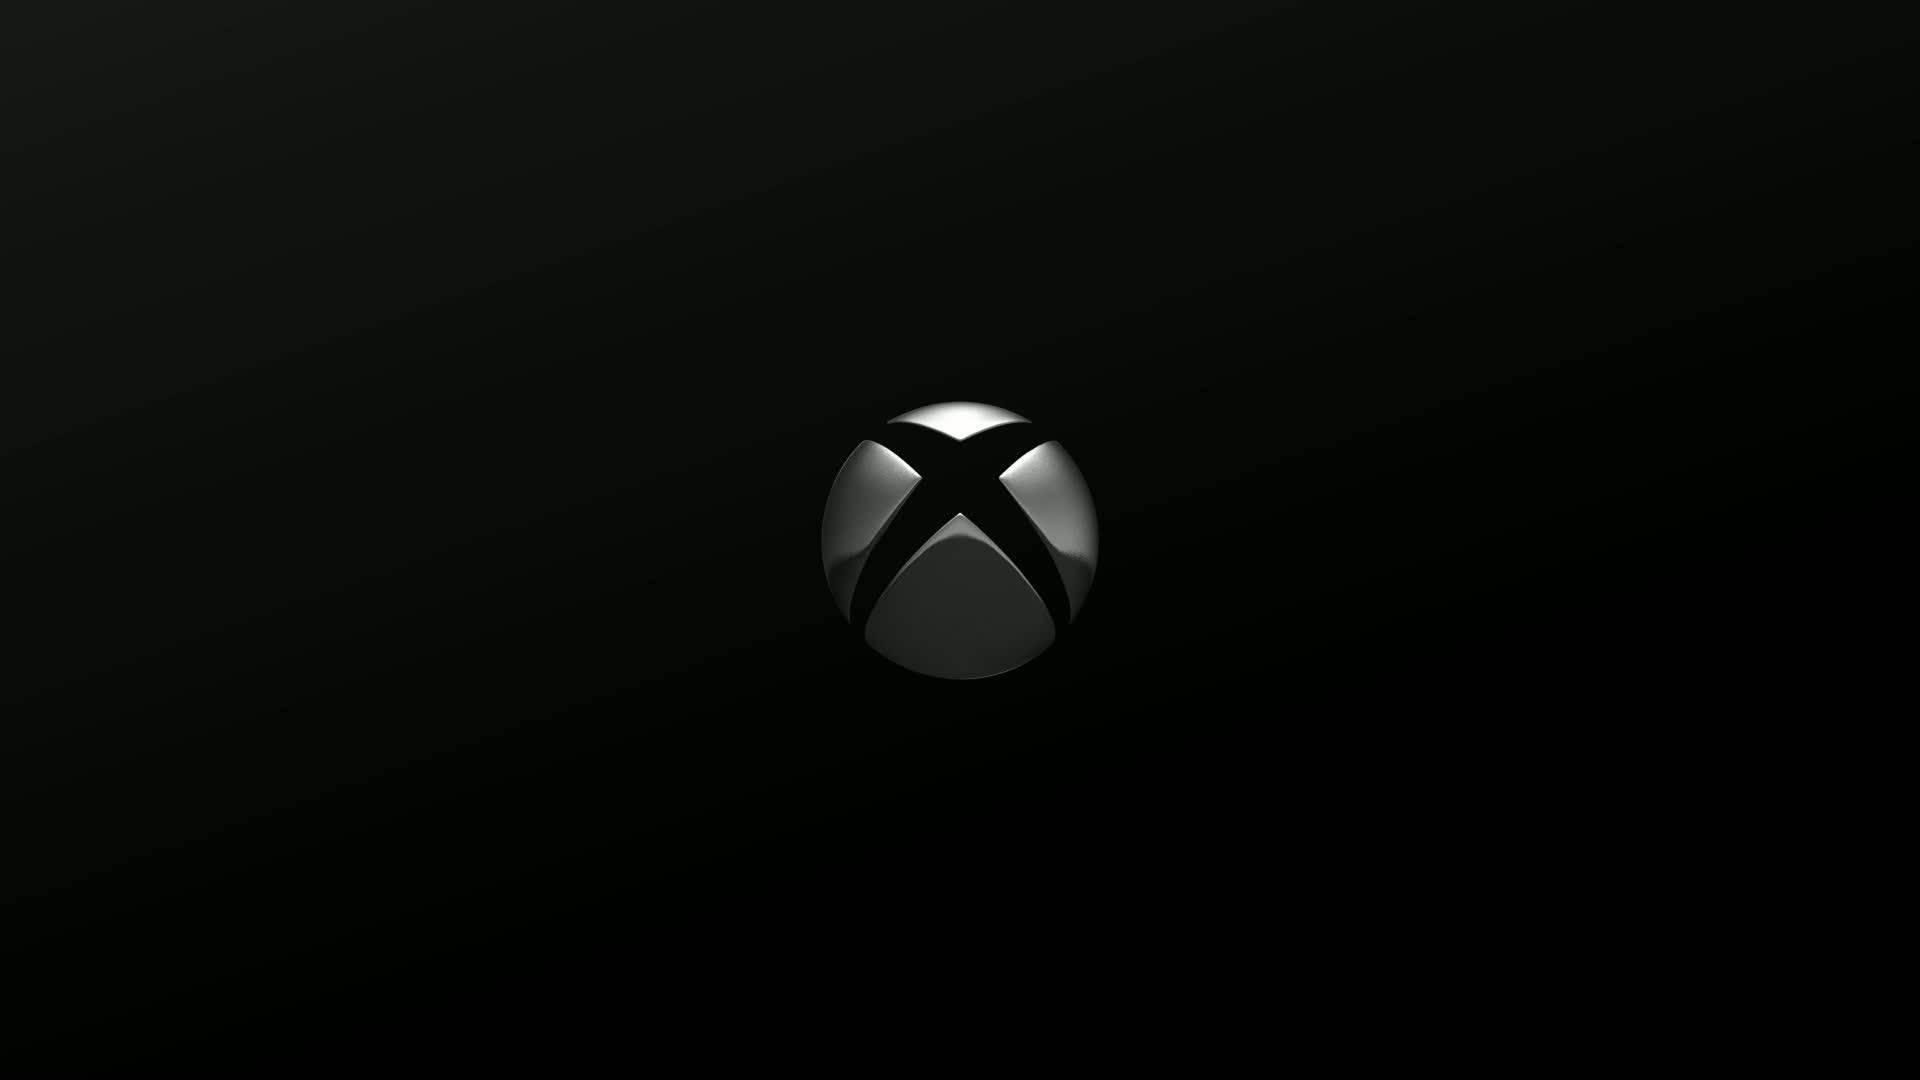 Xbox One Limited Edition Call of Duty: Advanced Warfare Bundle